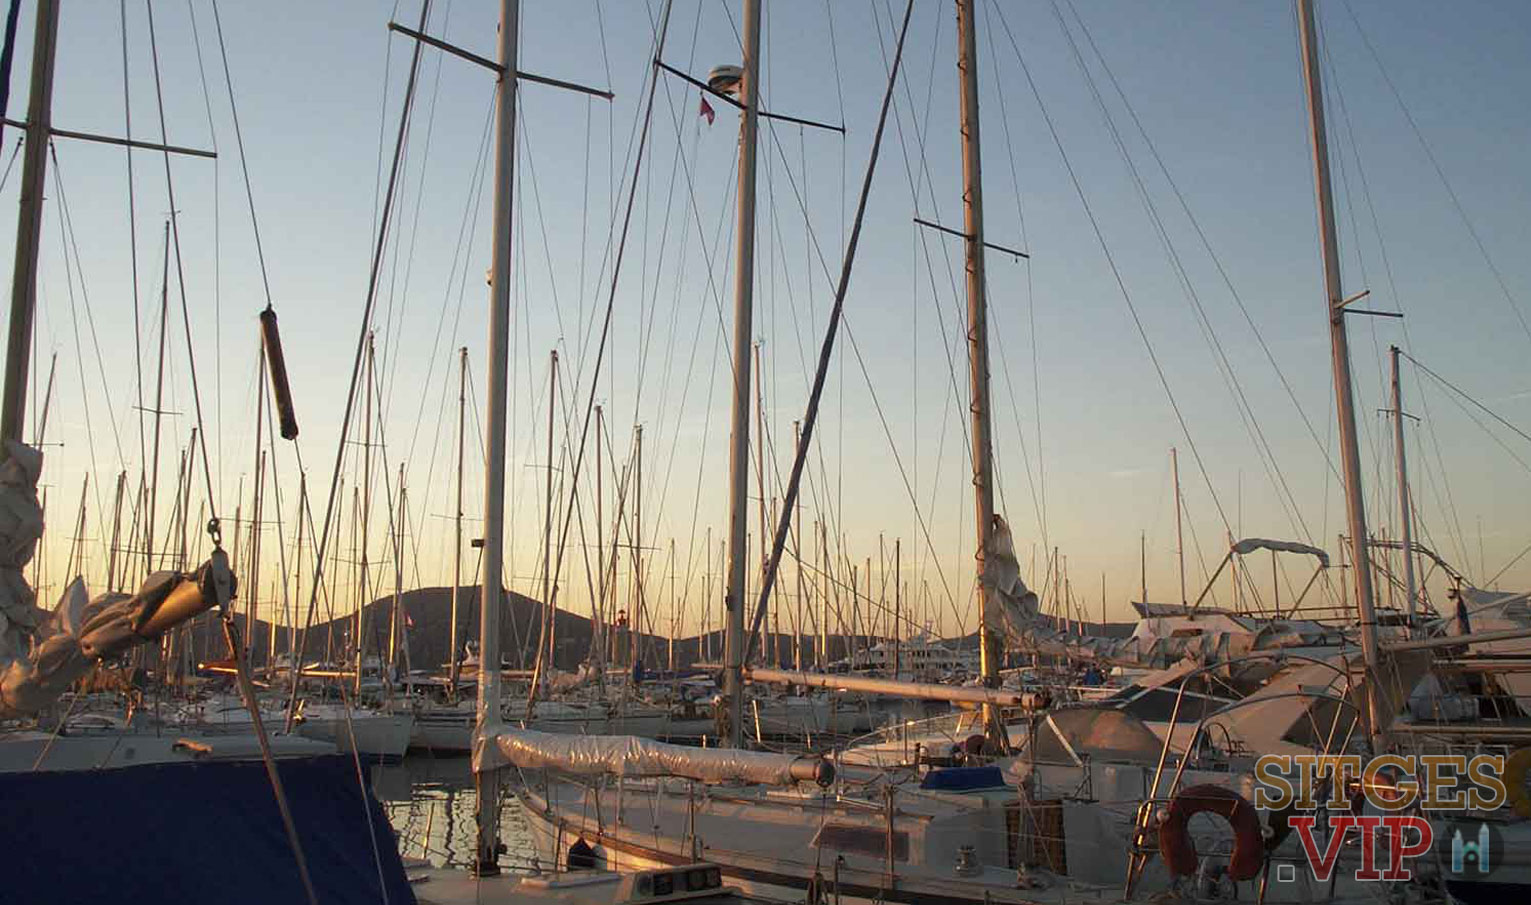 Charter a Yacht in Barcelona